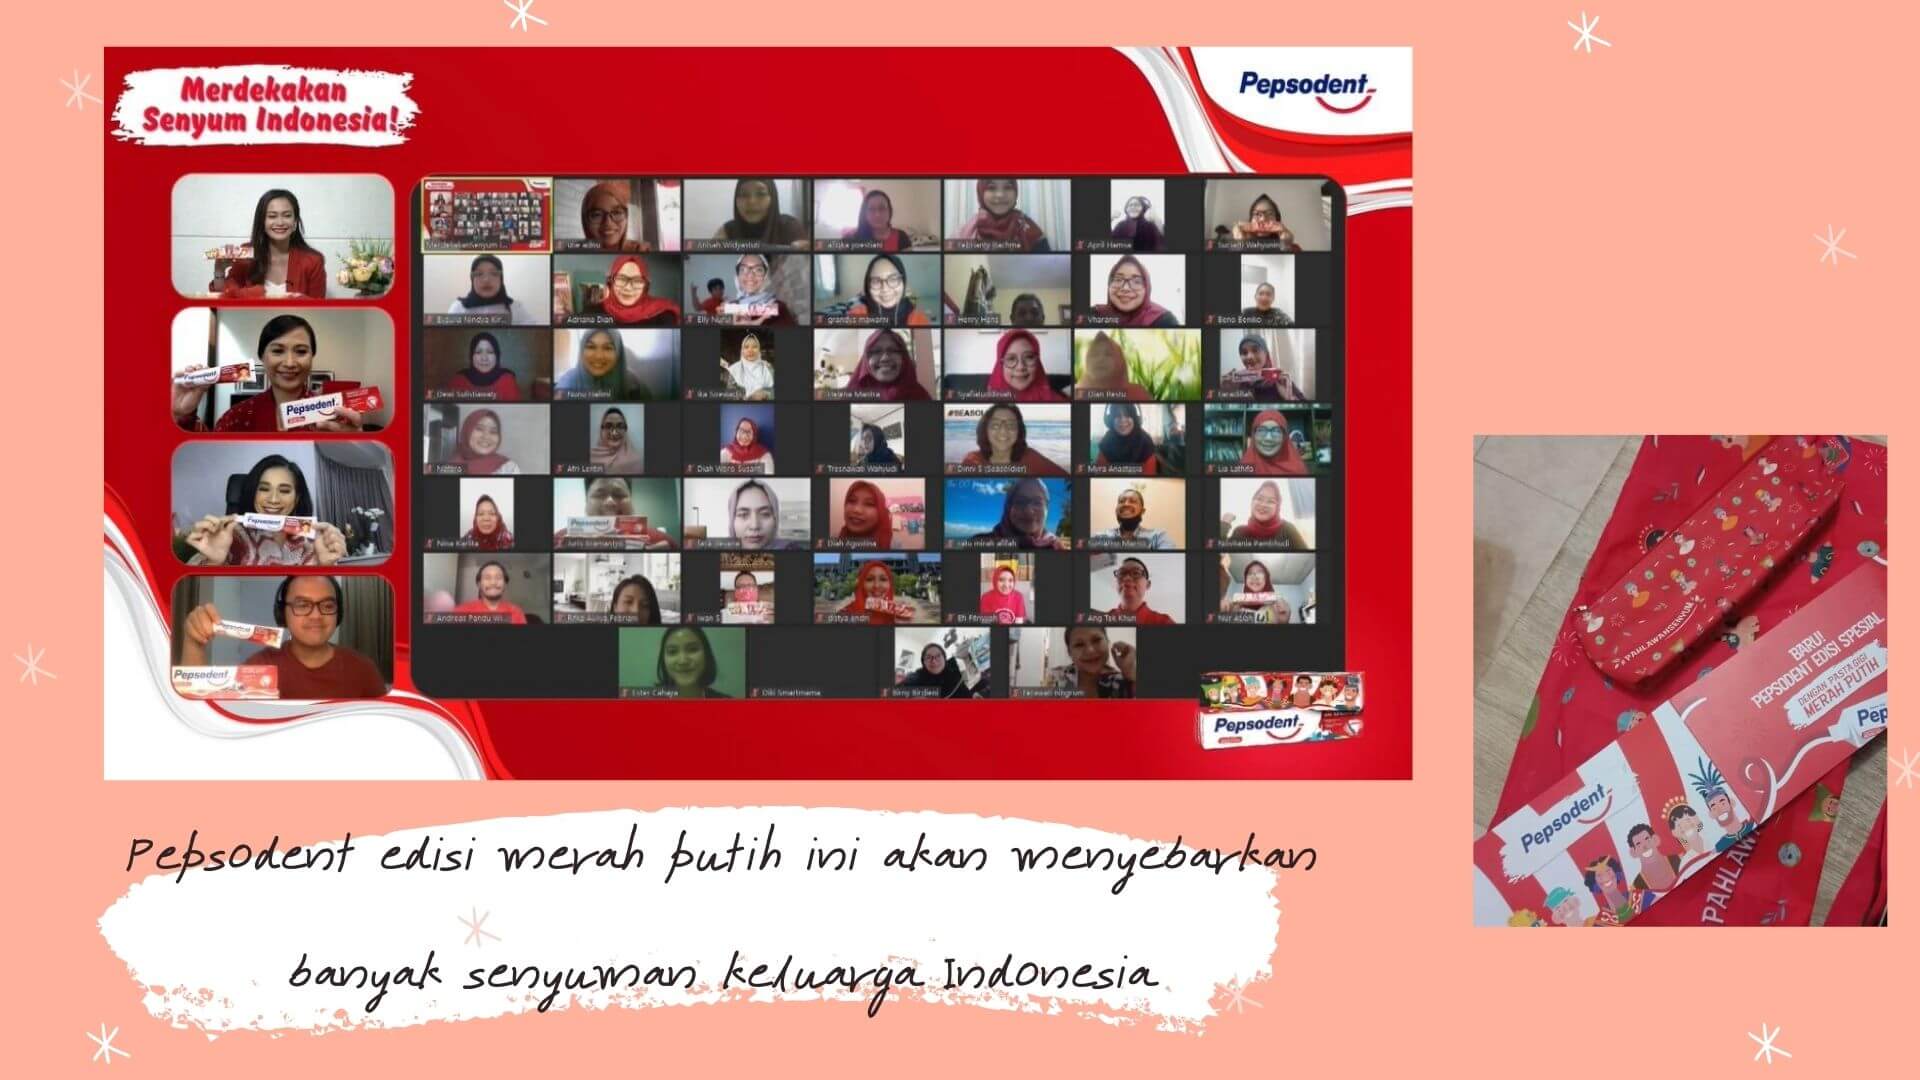 pepsodent merdekakan senyum indonesia, pepsodent edisi merah putih